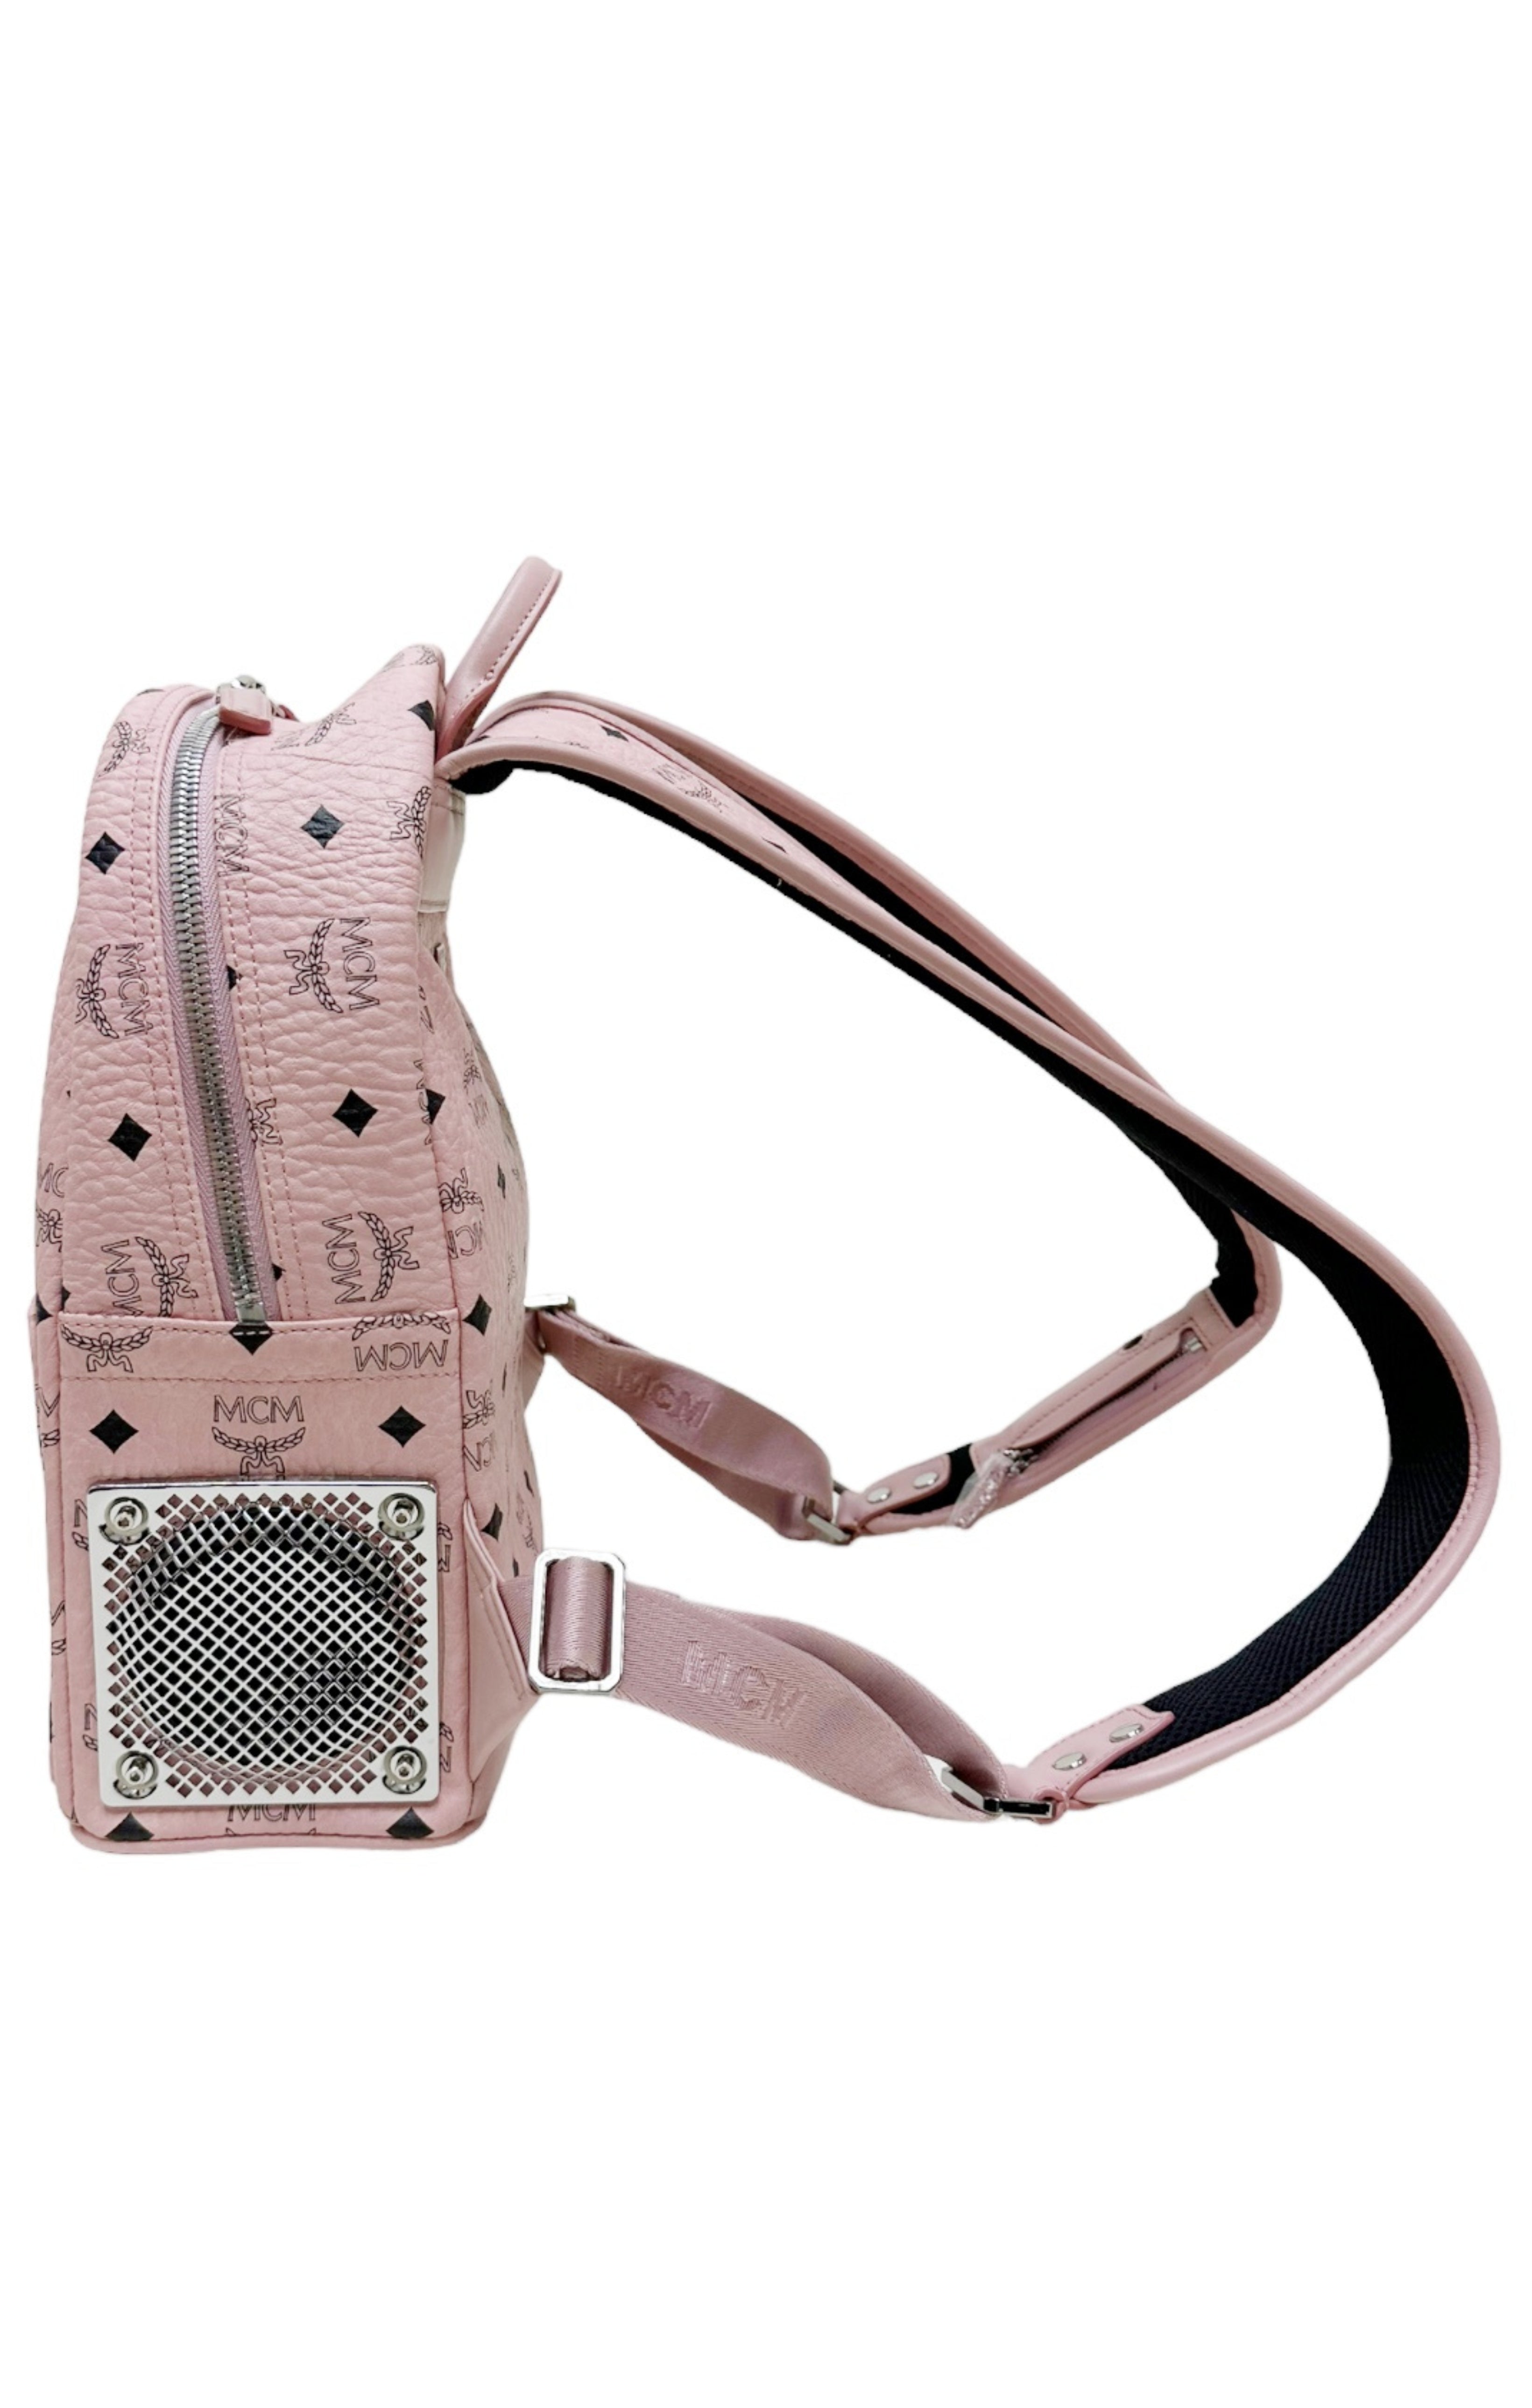 MCM (RARE) Backpack / Speaker Size: 9.25" x 4.375" x 12"; 1.5" drop handle